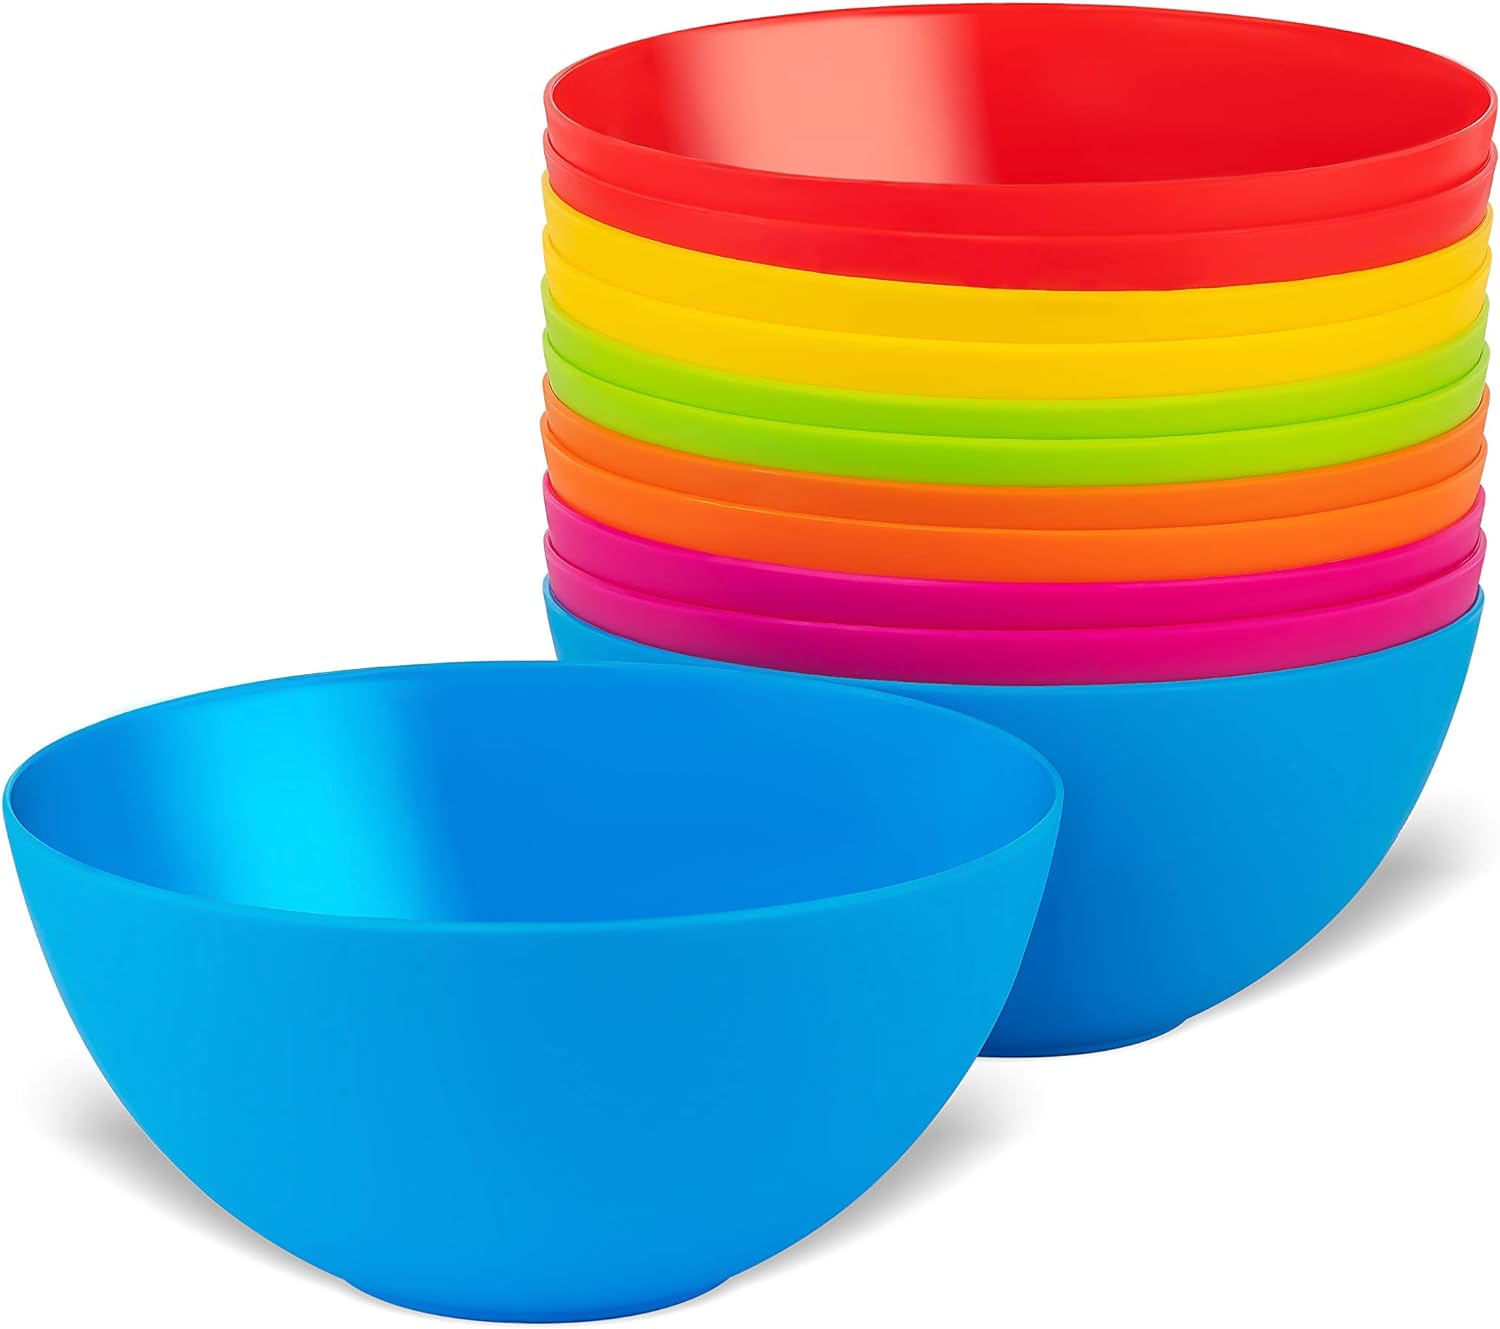 Set of childrens bowls